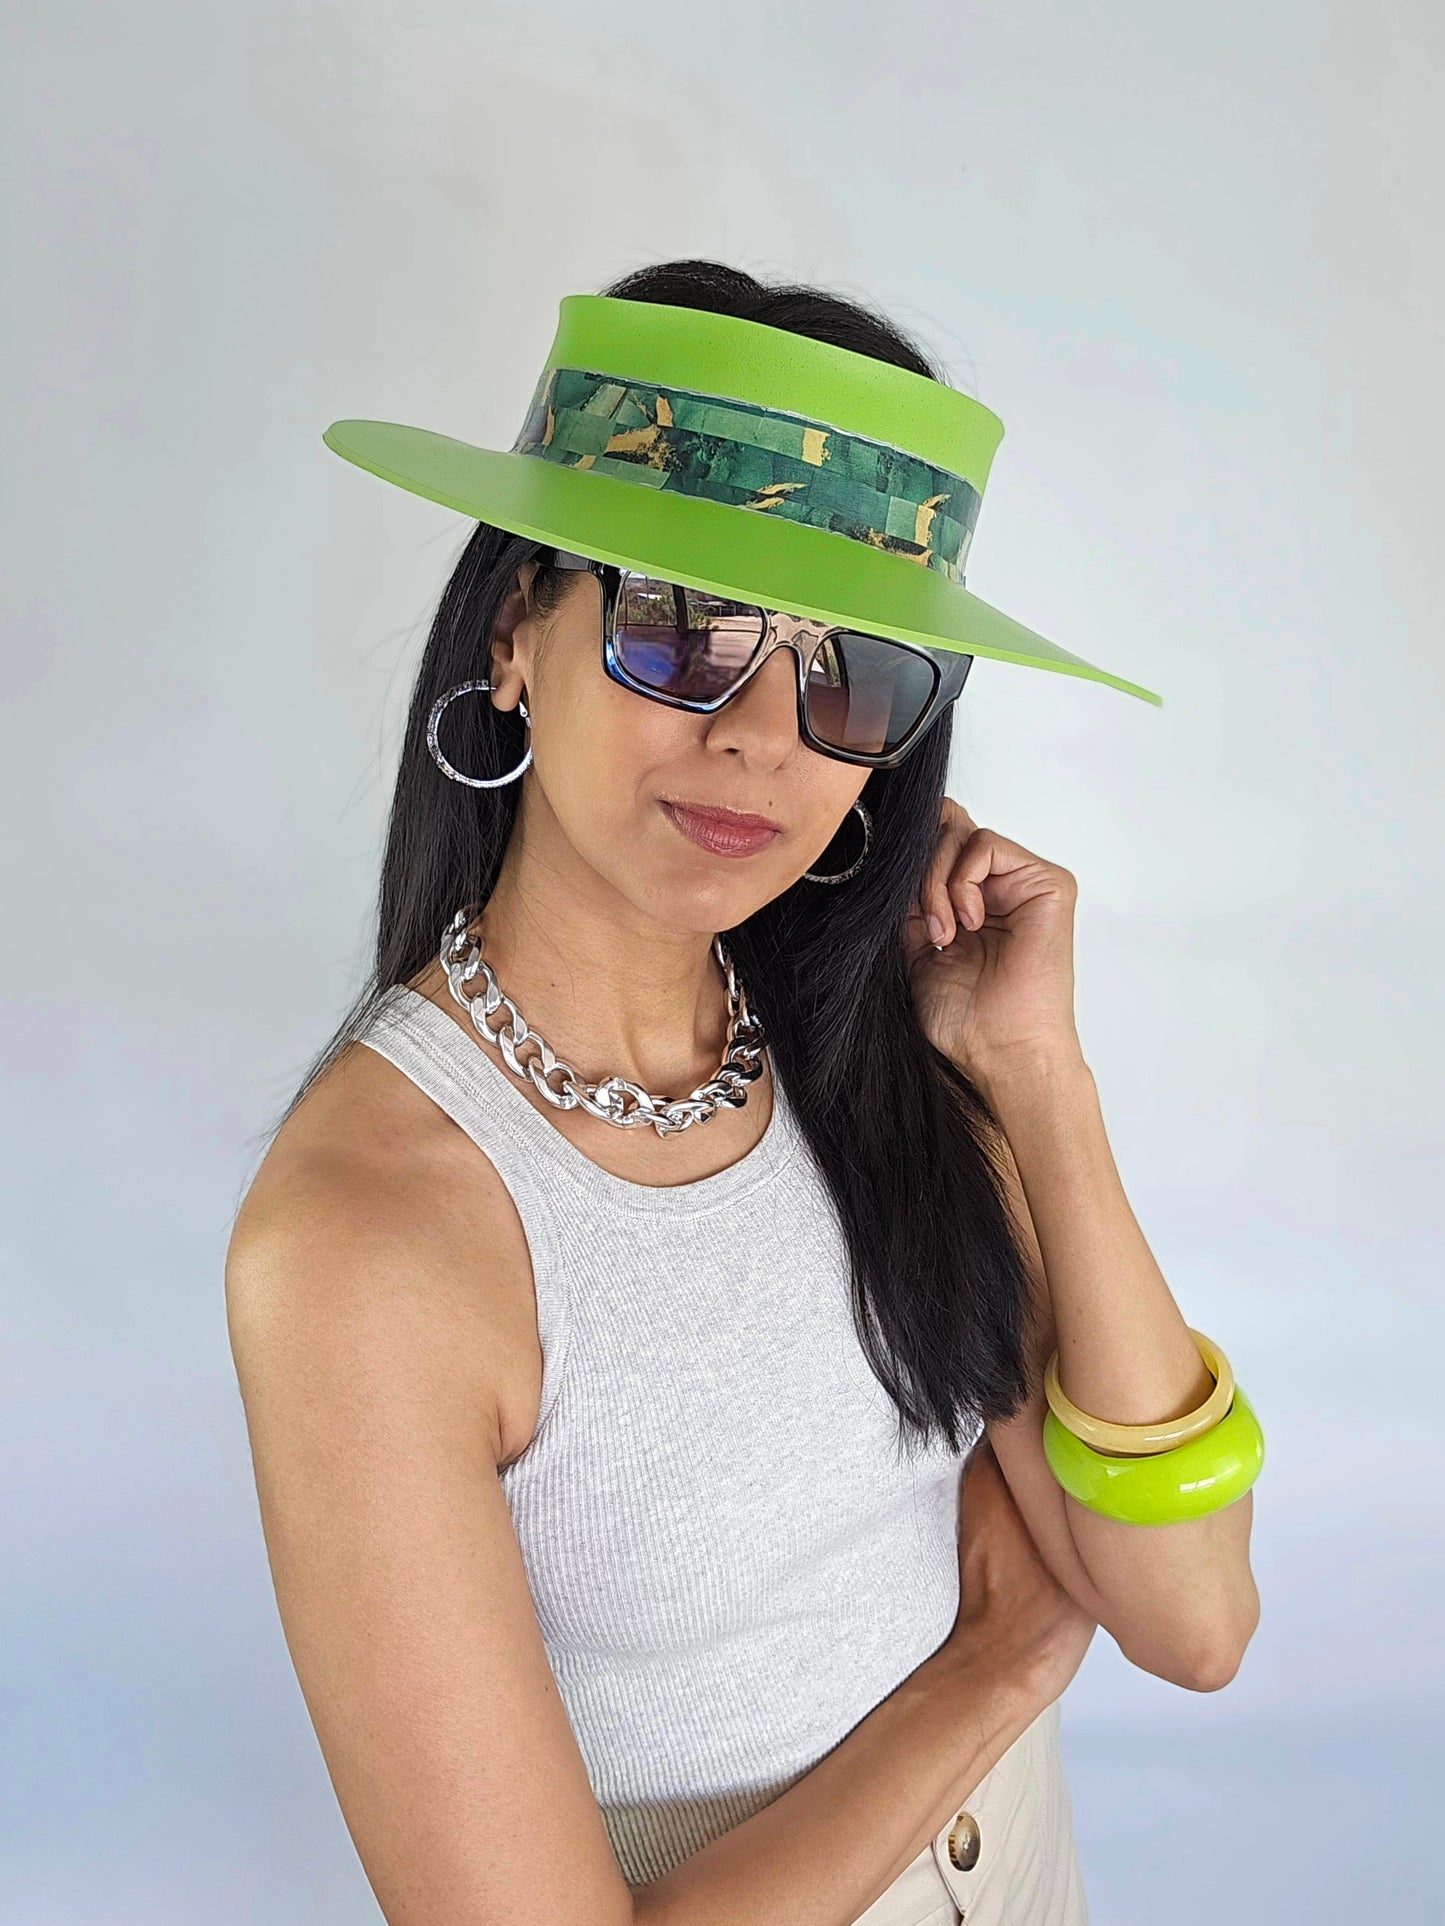 Neon Green Audrey Sun Visor Hat with Gorgeous Dark Green Marbled Band: 1950s, Walks, Brunch, Asian, Golf, Summer, Church, No Headache, Pool, Beach